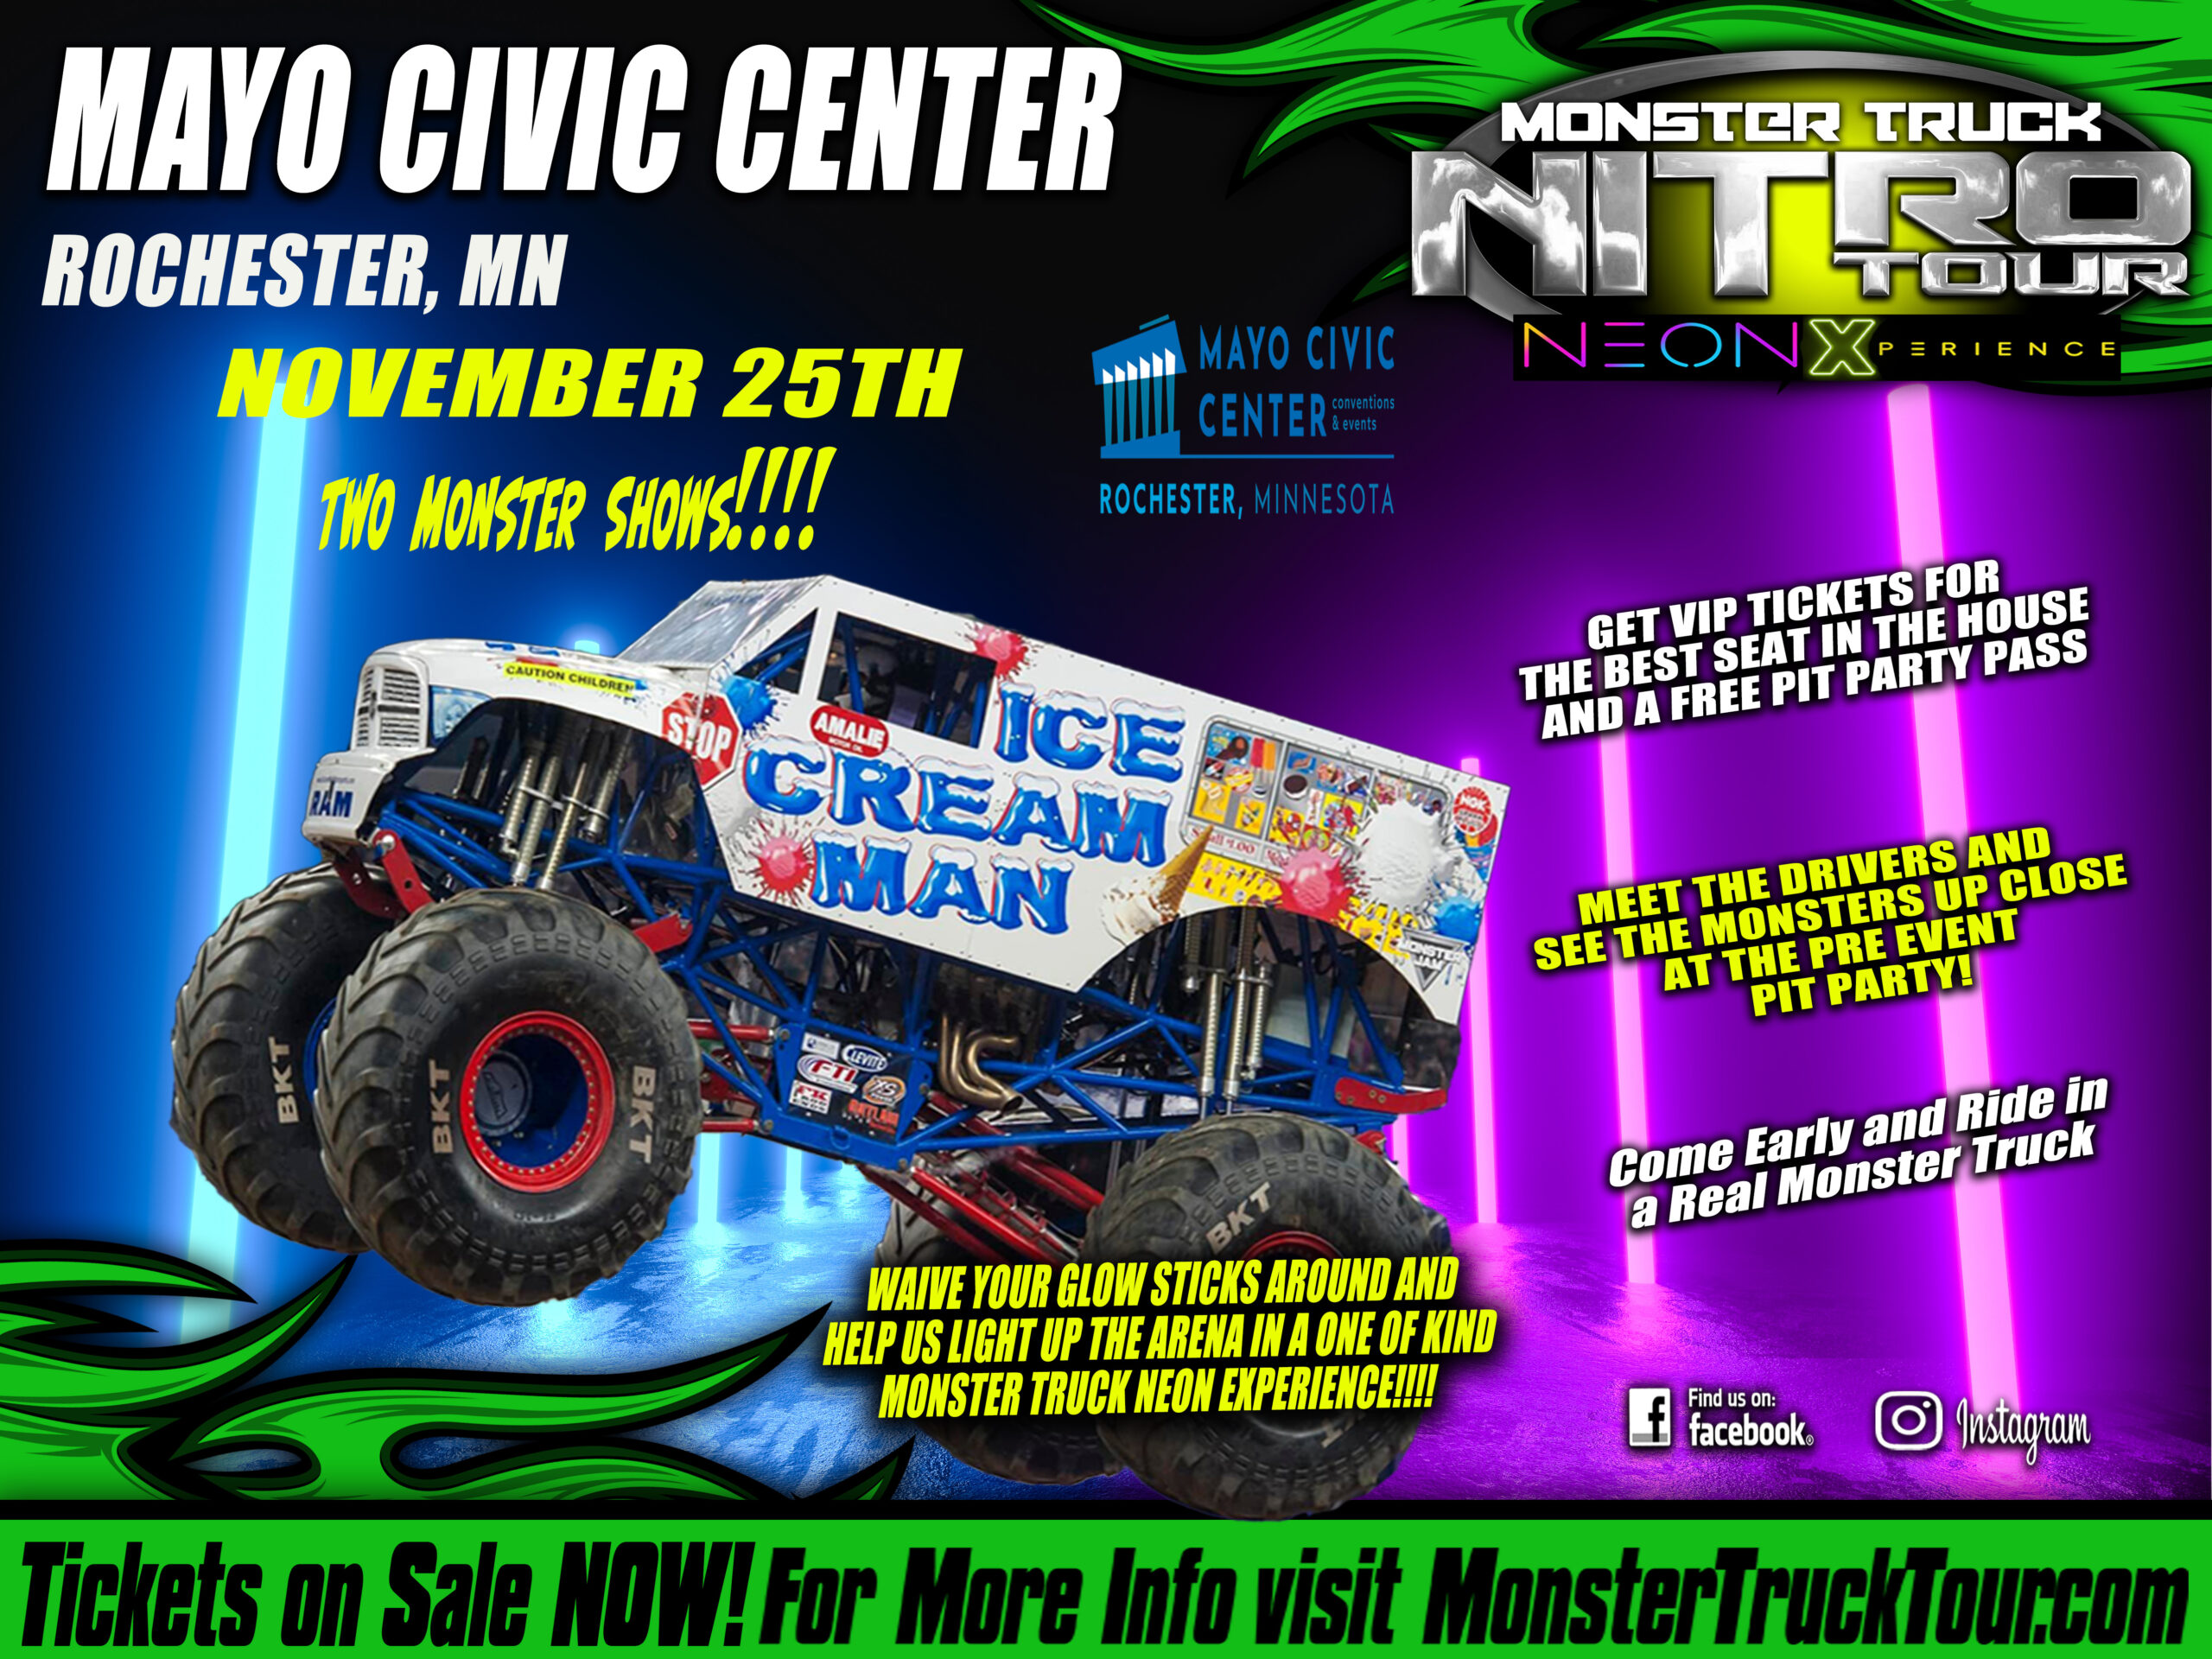 Monster Truck Nitro Tour - Radio Station, Minnesota 97.5